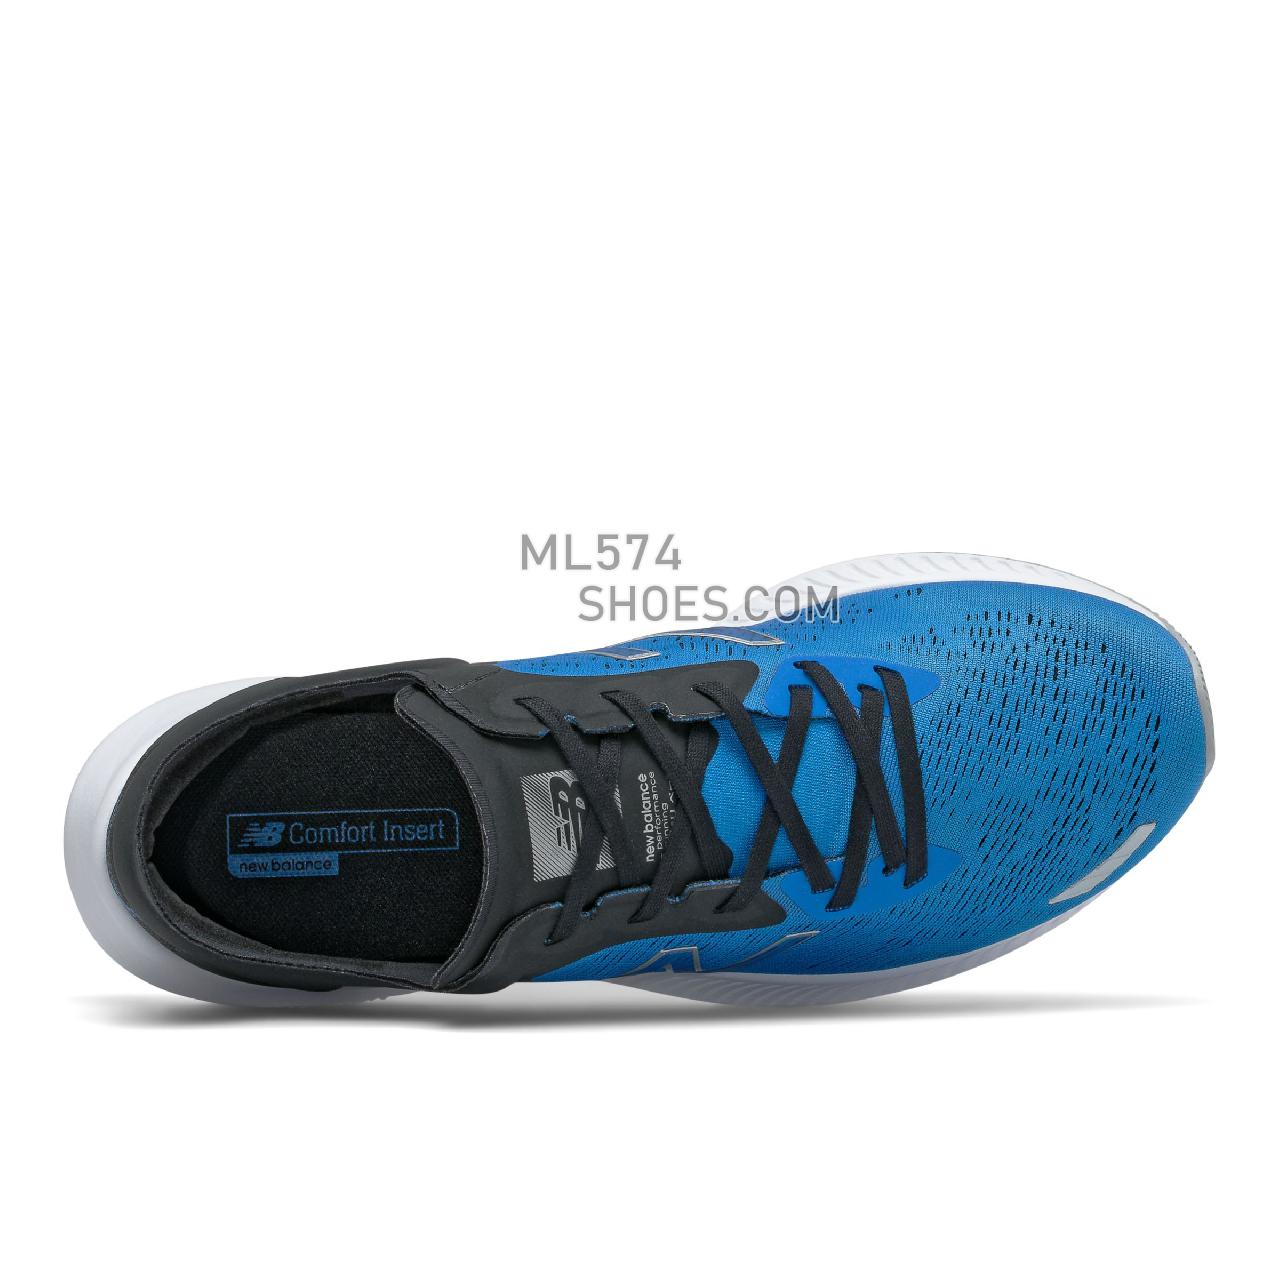 New Balance DynaSoft PESU - Men's Classic Sneakers - Laser Blue with Black - MPESURB1